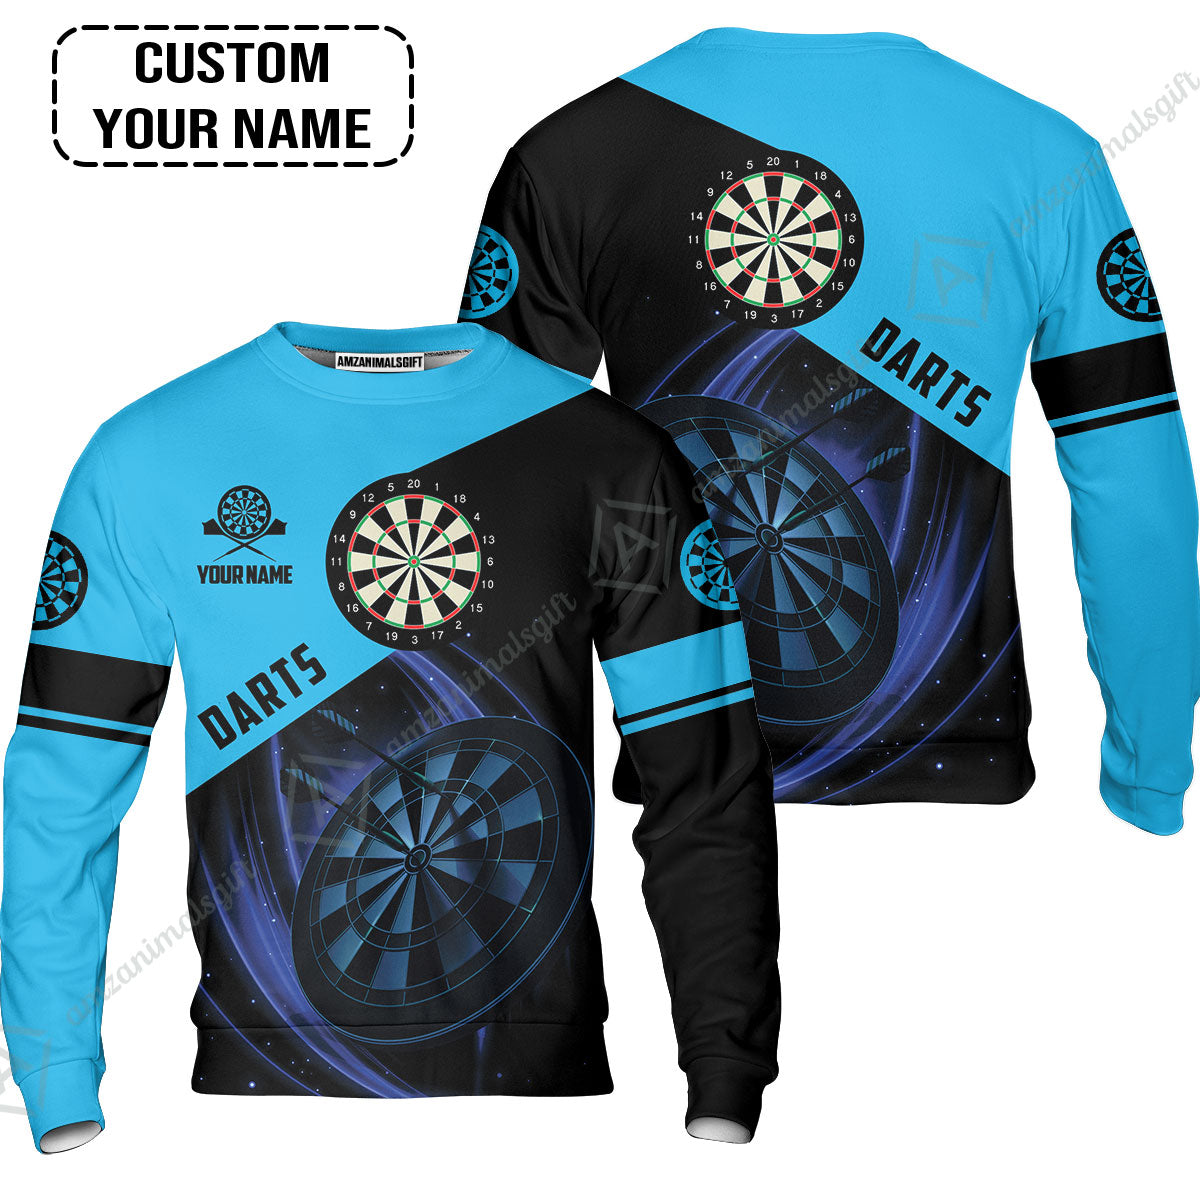 Customized Name Darts Sweatshirt, Dartboard Personalized Name Blue Darts Team Sweatshirt